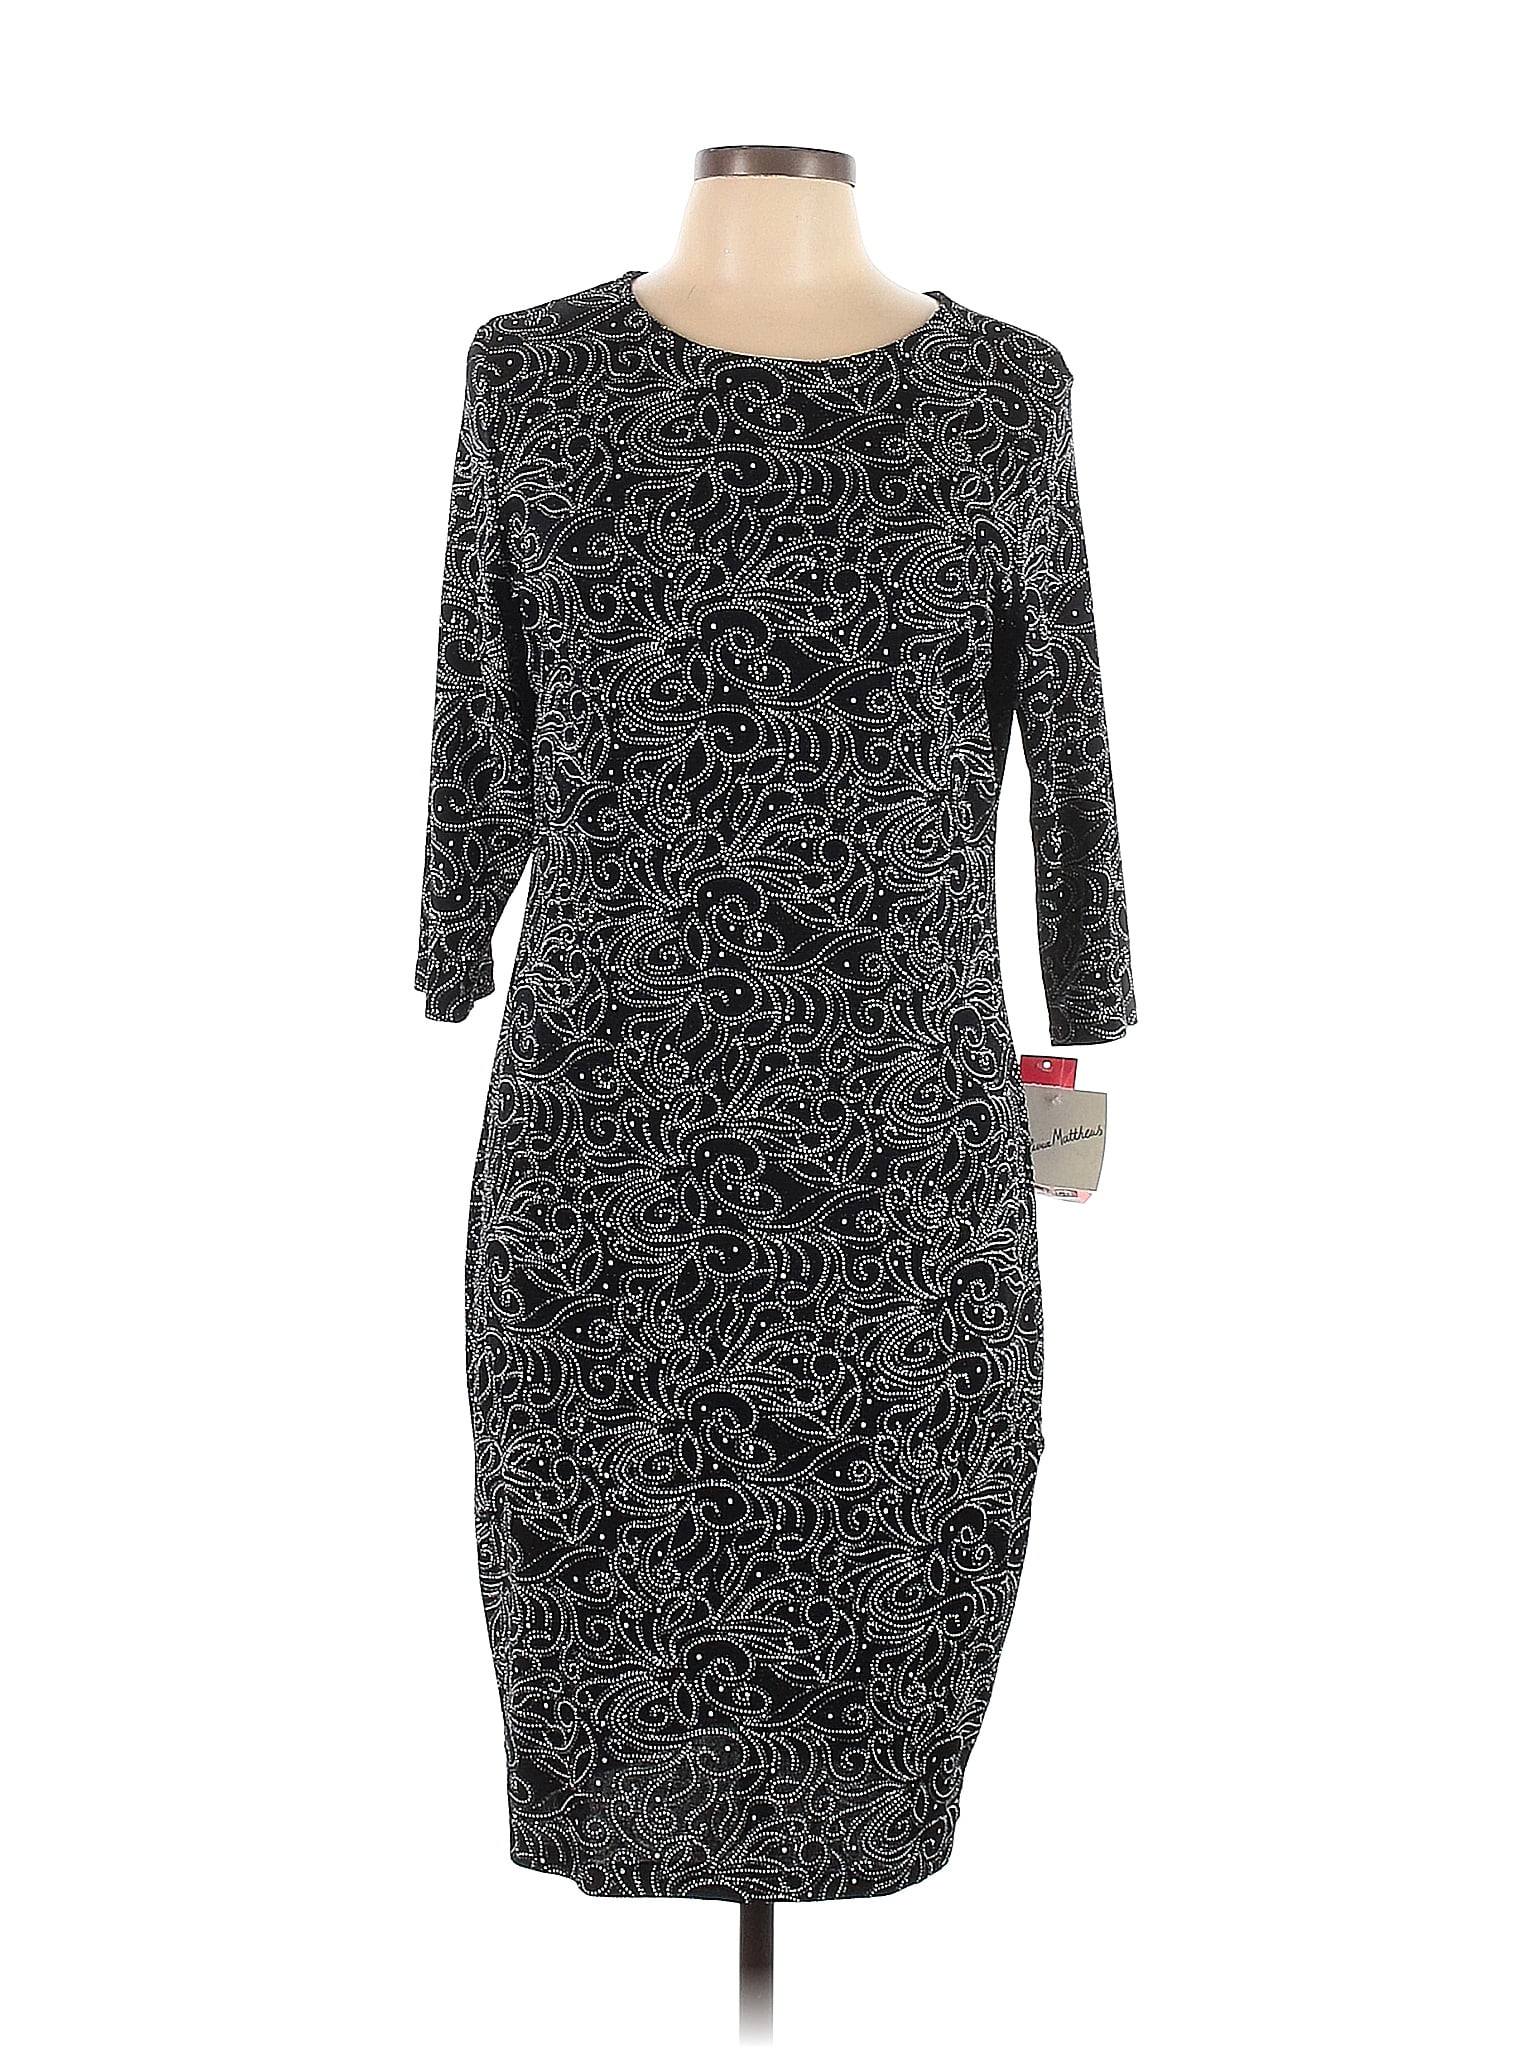 Olivia Matthews Black Cocktail Dress Size XL - 53% off | thredUP